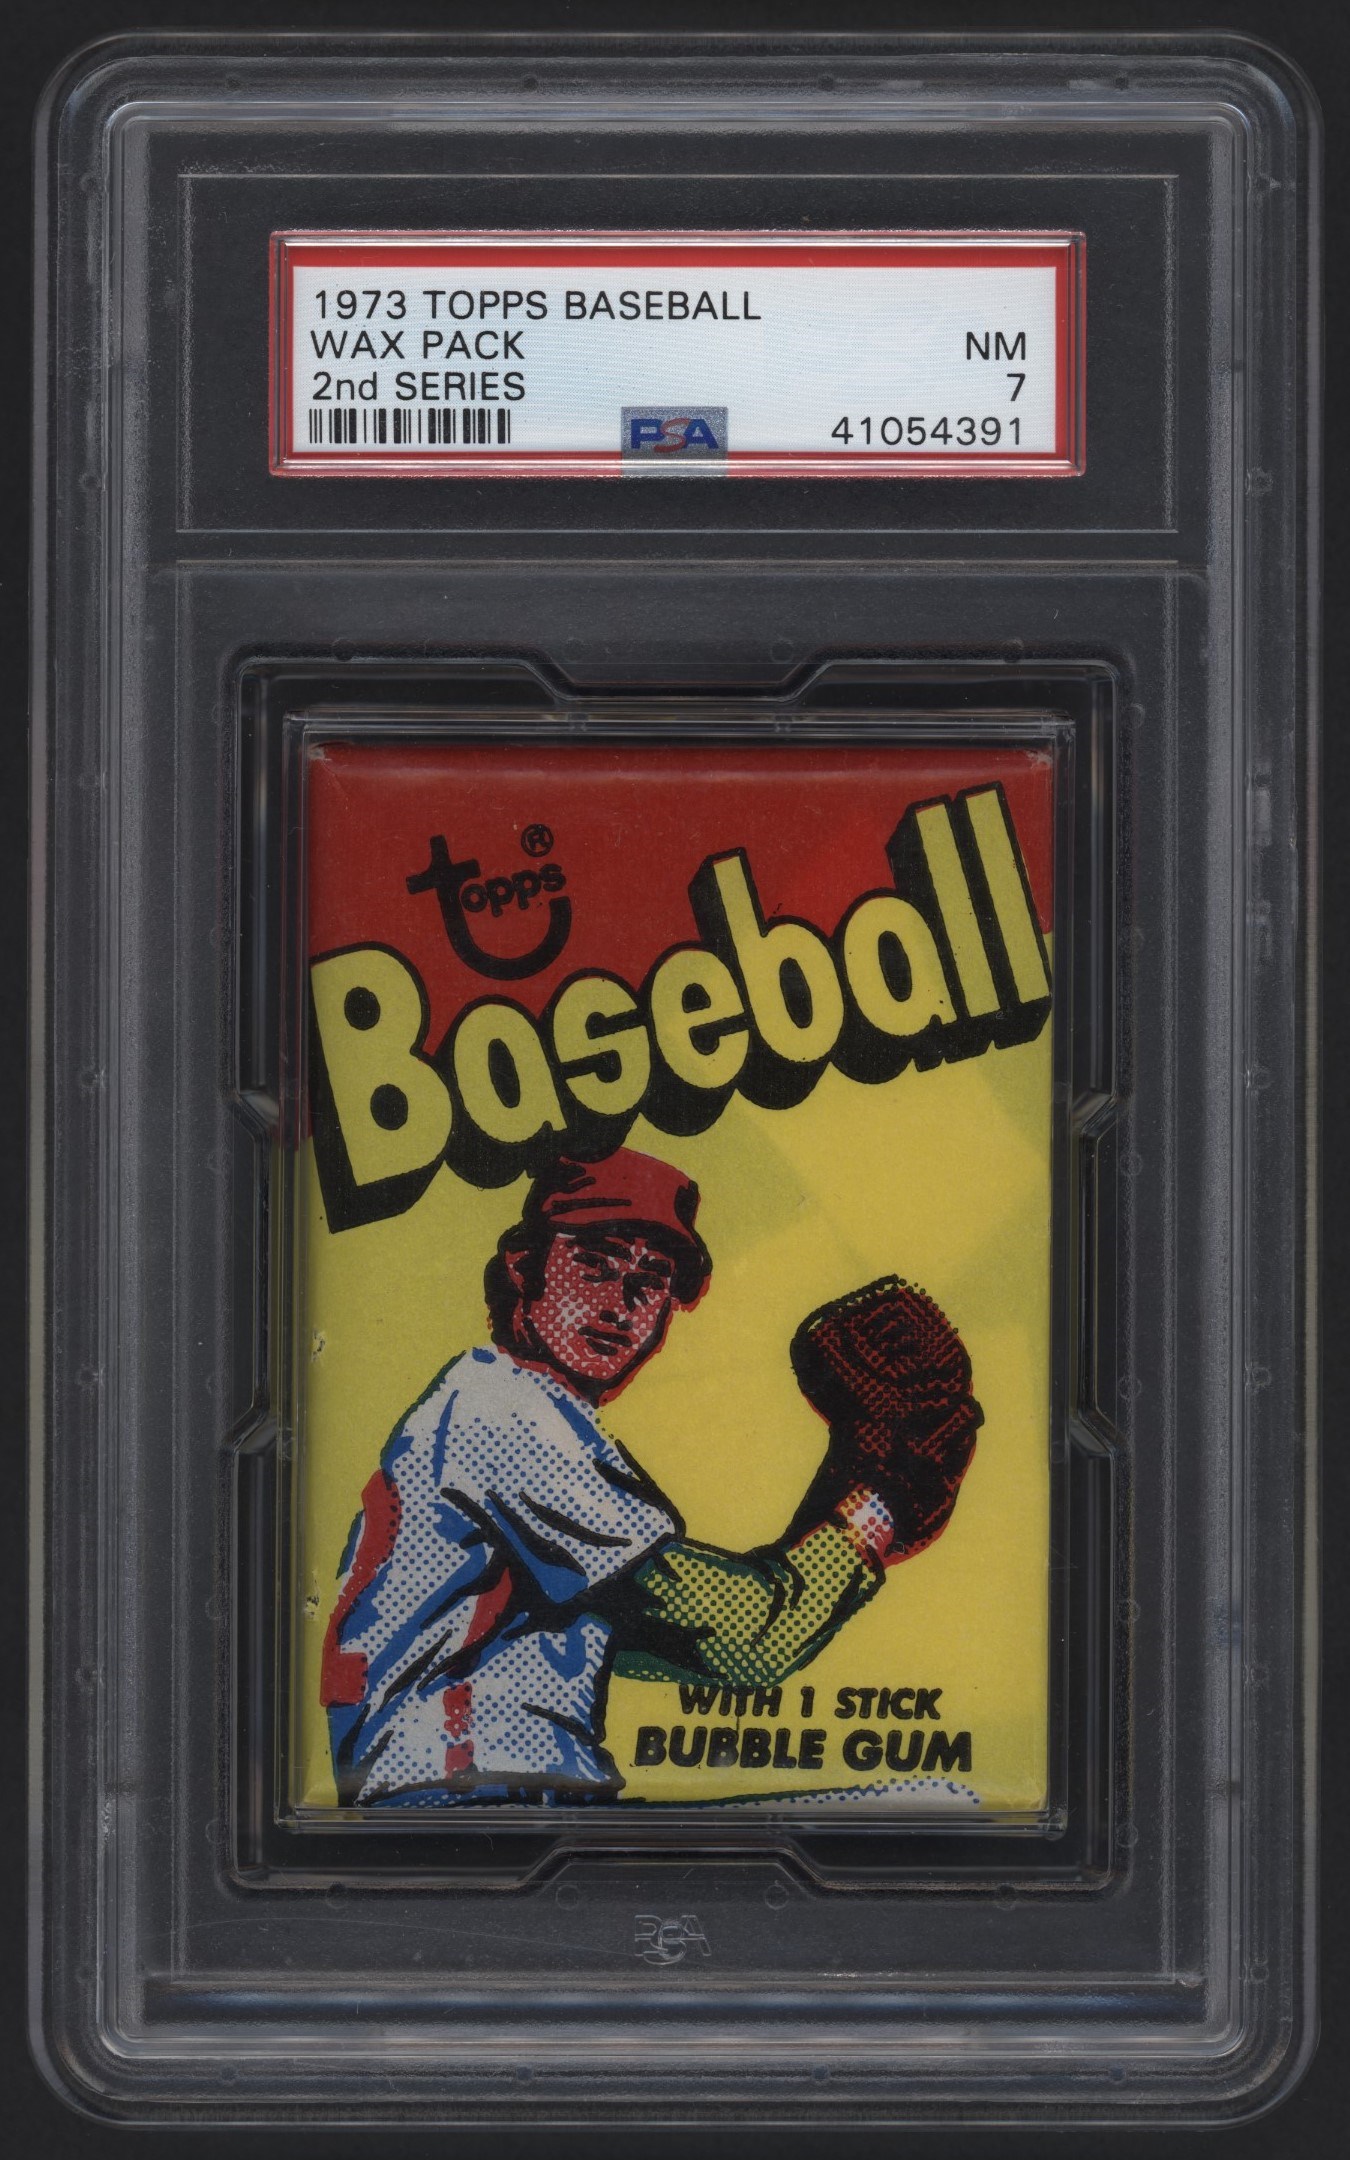 Baseball and Trading Cards - 1973 Topps Baseball 2nd Series Wax Pack PSA NM 7